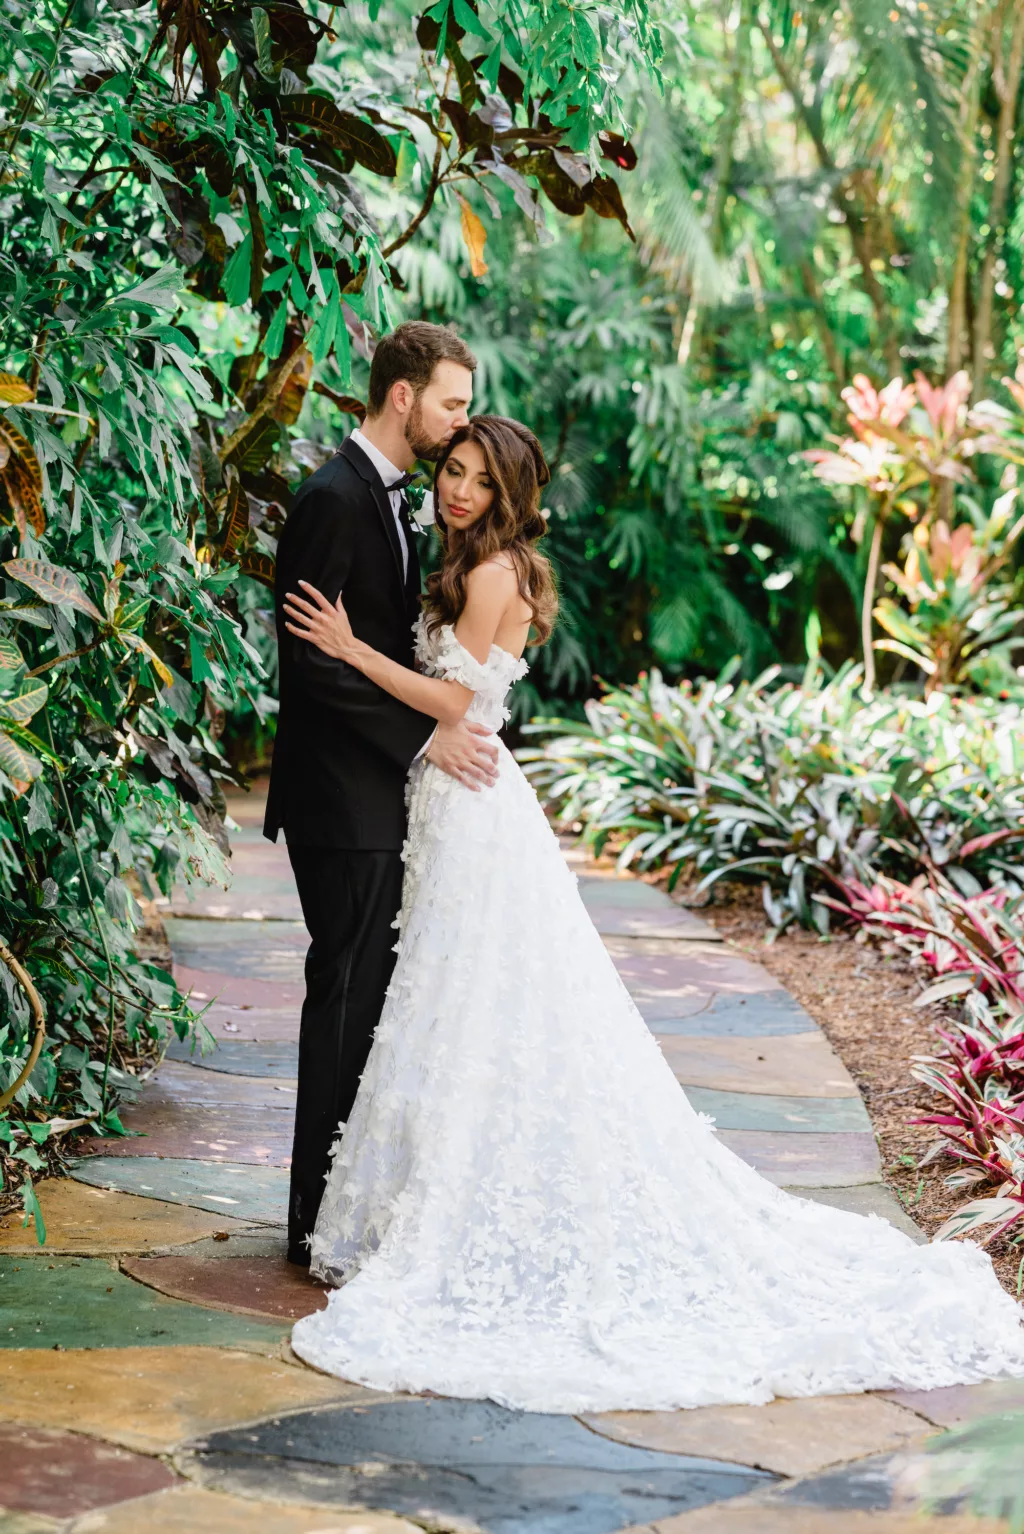 Bride and Groom Garden Wedding Portrait | Tampa Bay Photographer Iyrus Weddings | St. Petersburg Florida Event Venue Sunken Gardens